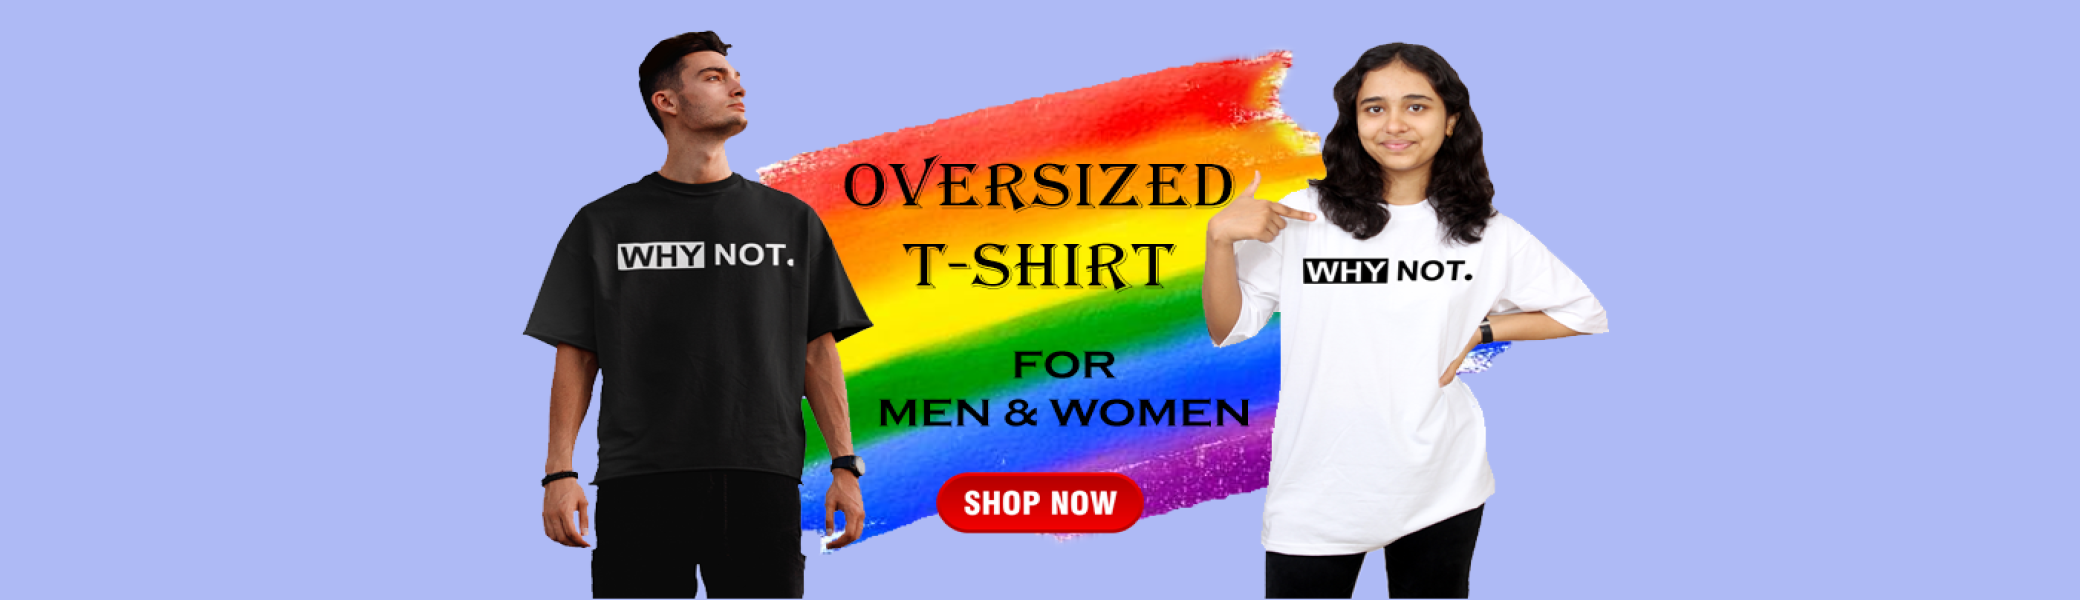 Oversized T-shirt